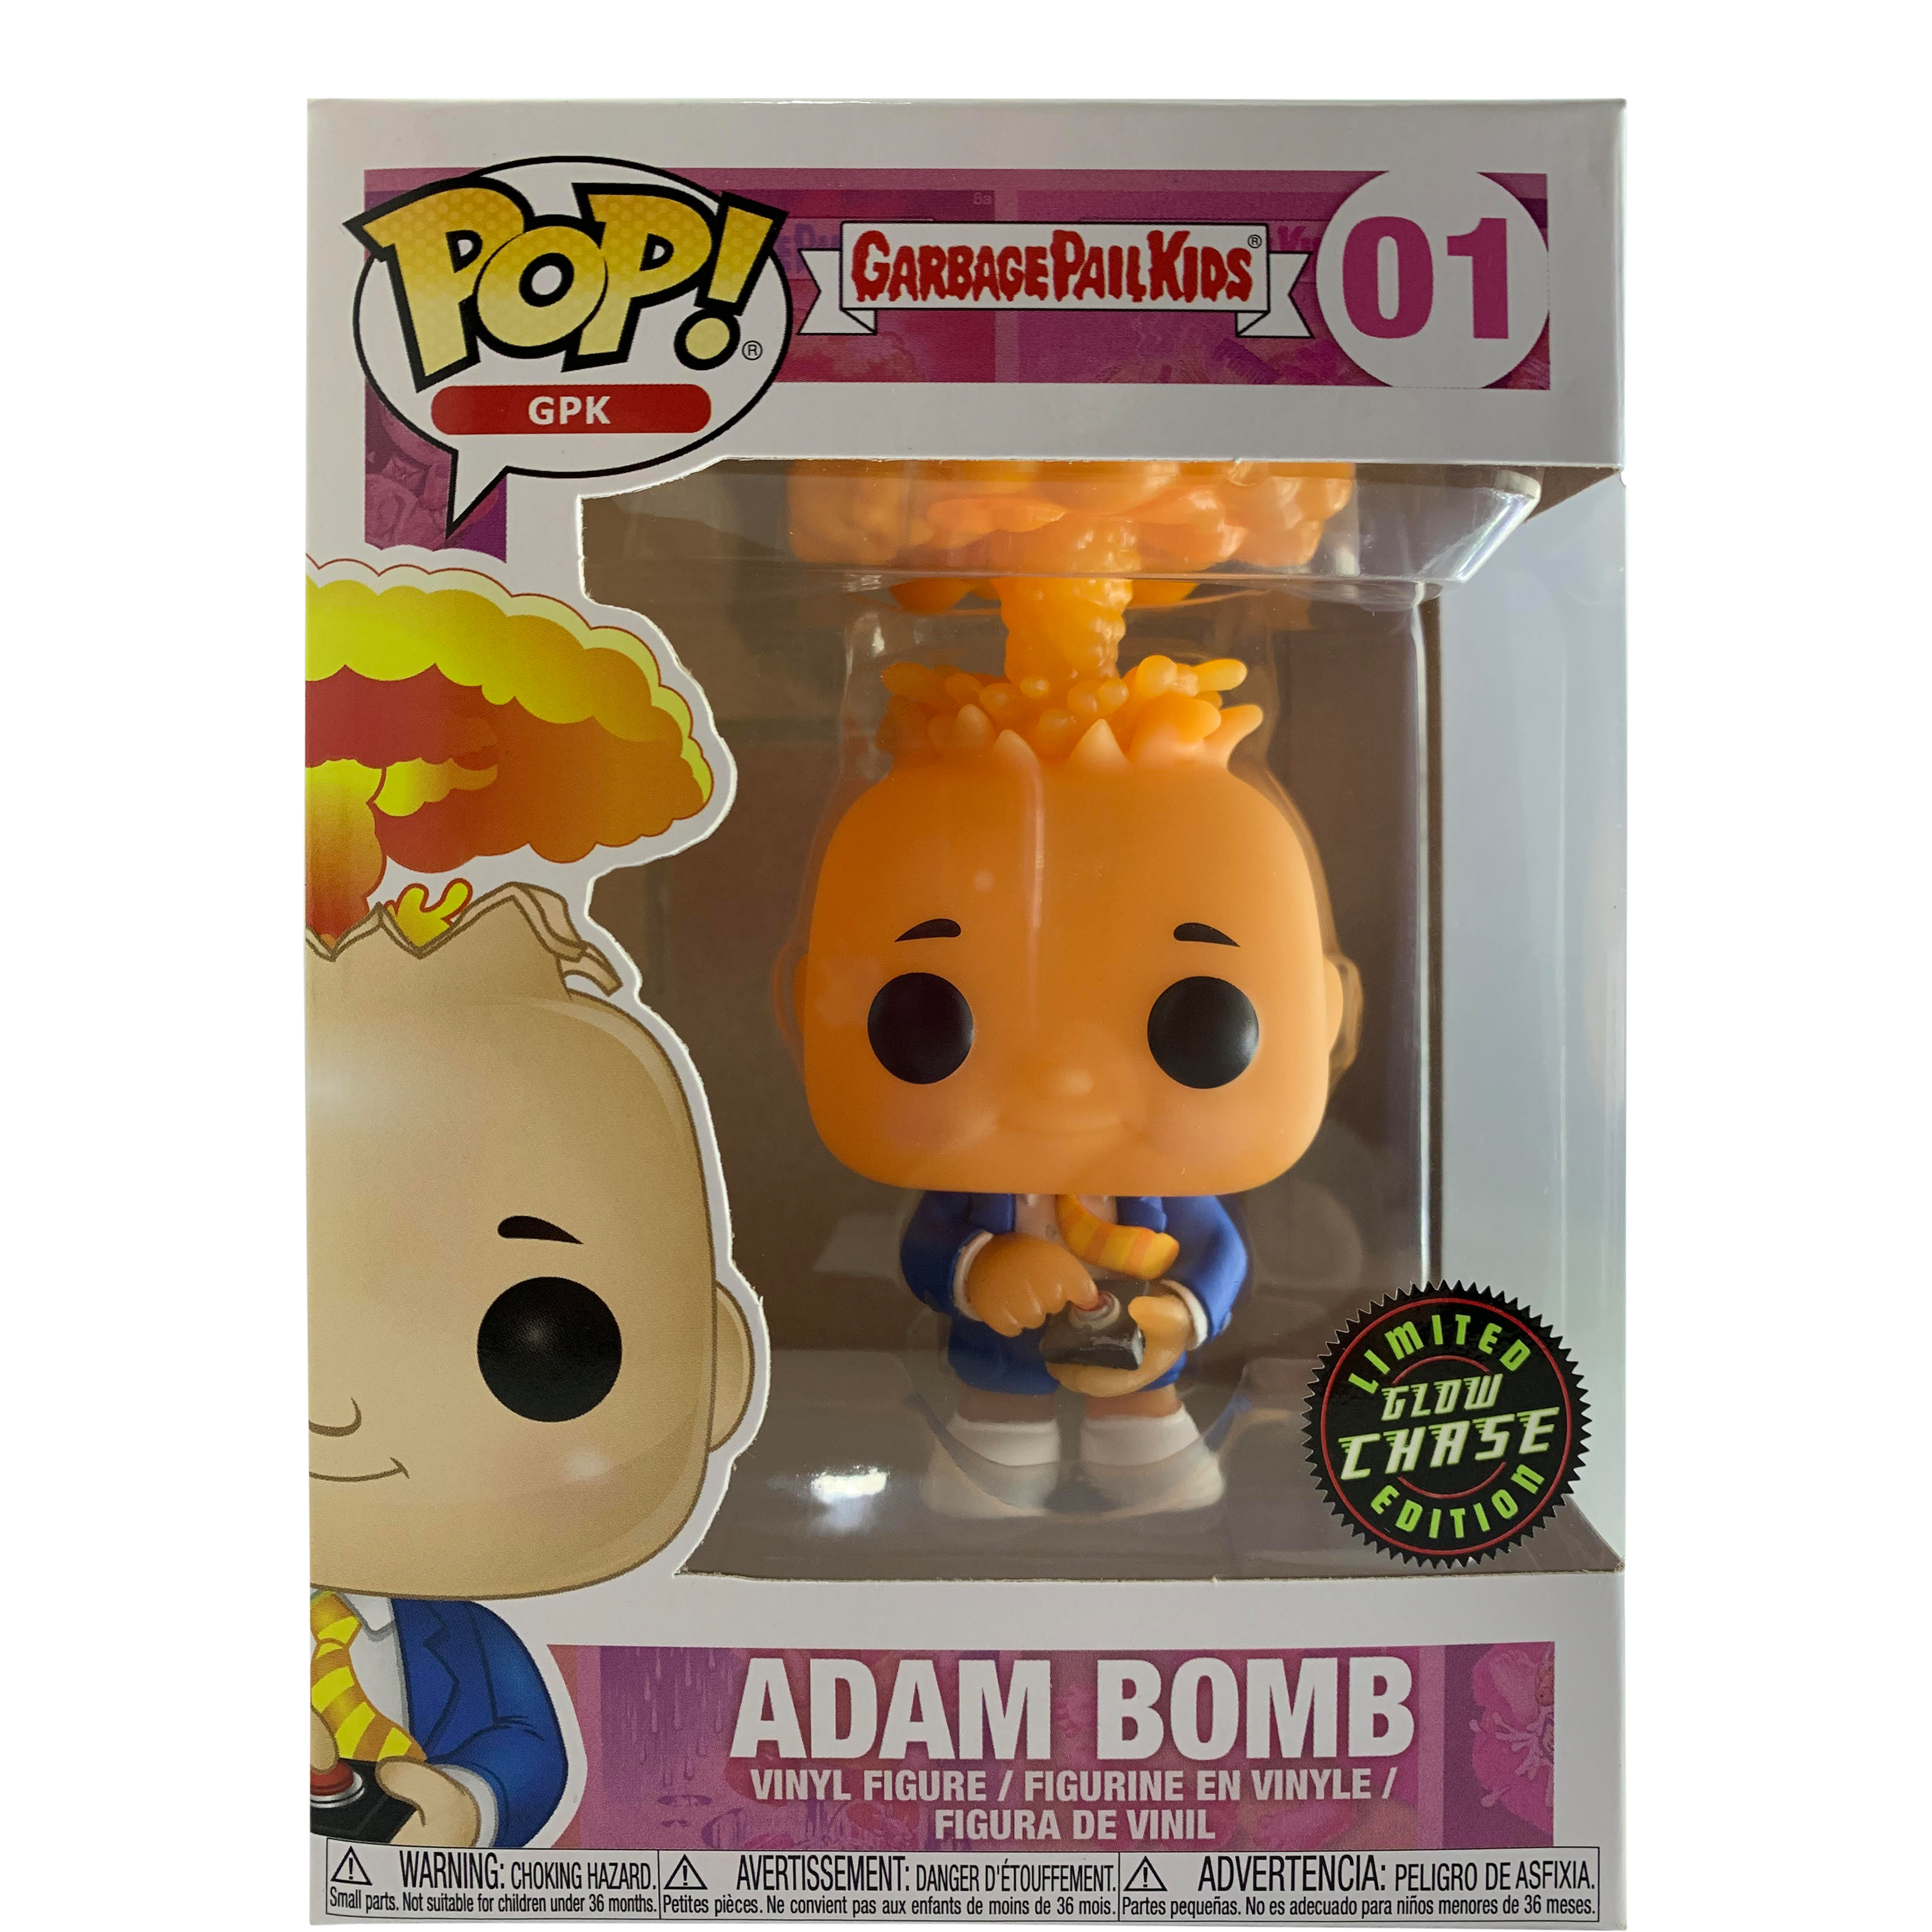 Funko Pop! Garage Pail Kids Adam Bomb (Glow) Chase Edition Figure 